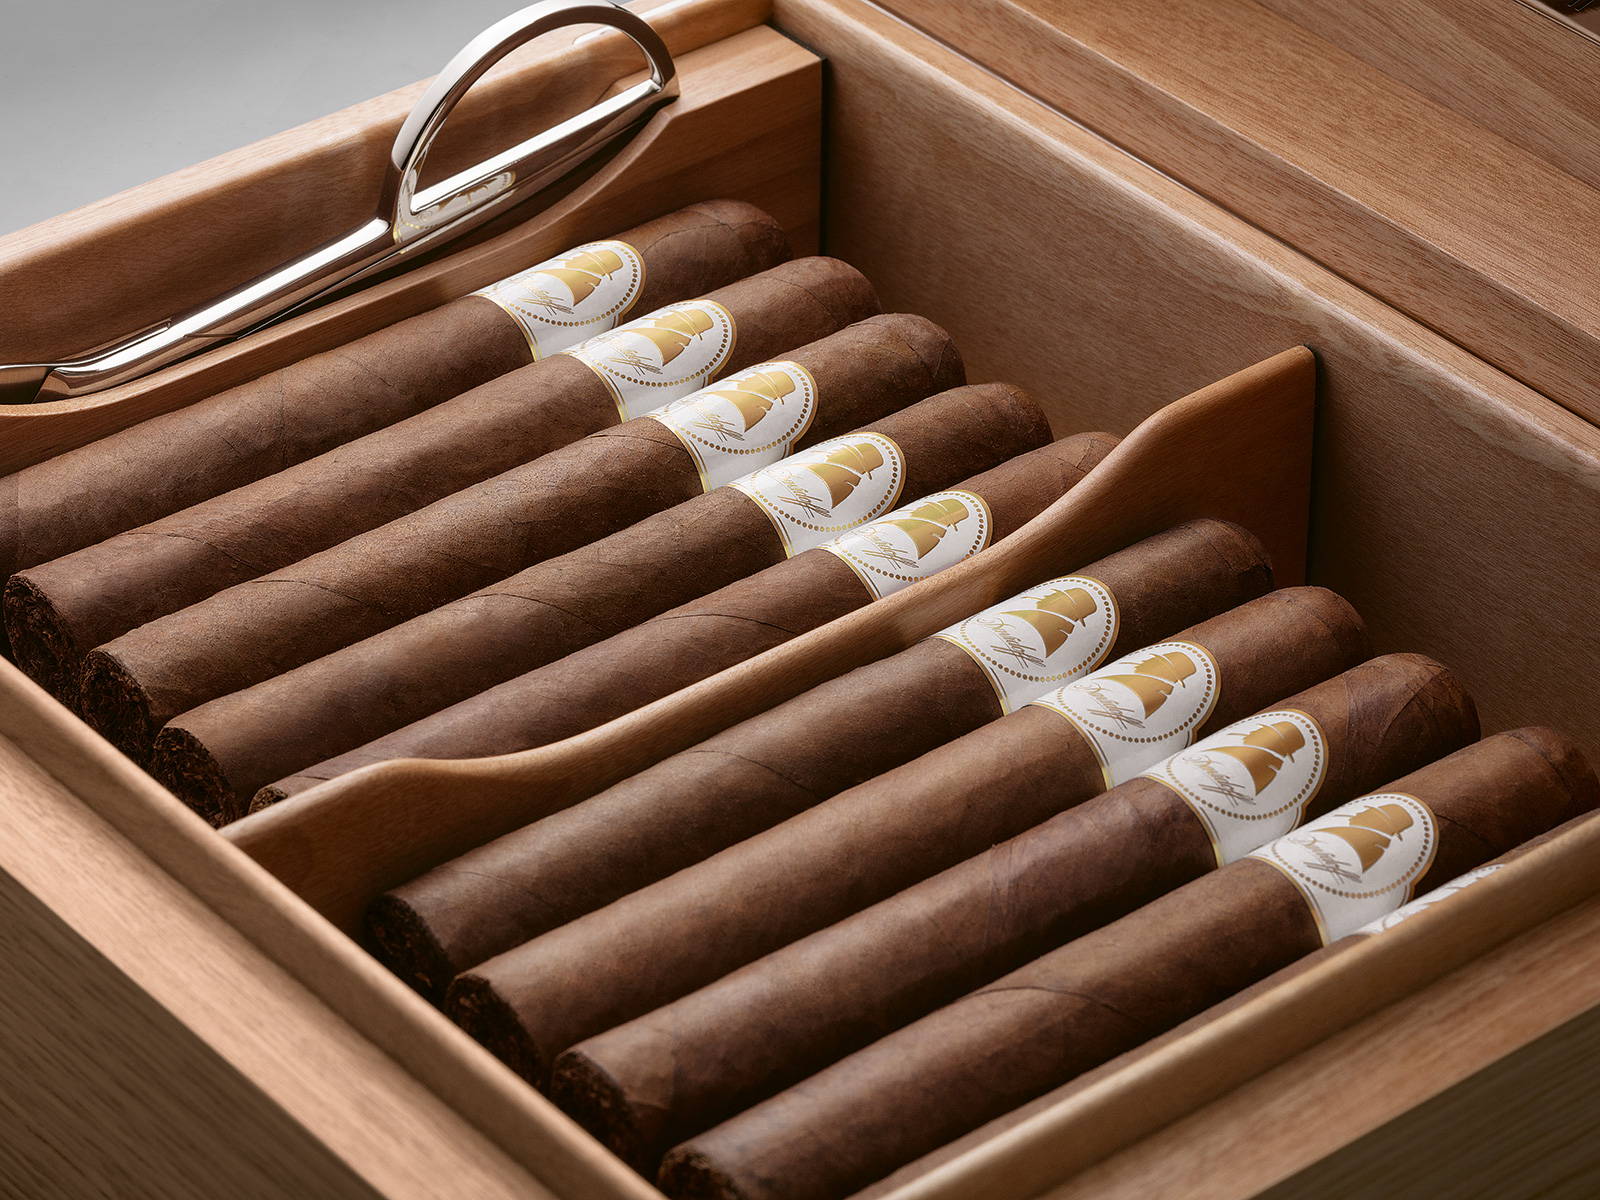 2. Opened Davidoff Winston Churchill Primos Humidor with «The Original Series» cigars inside.